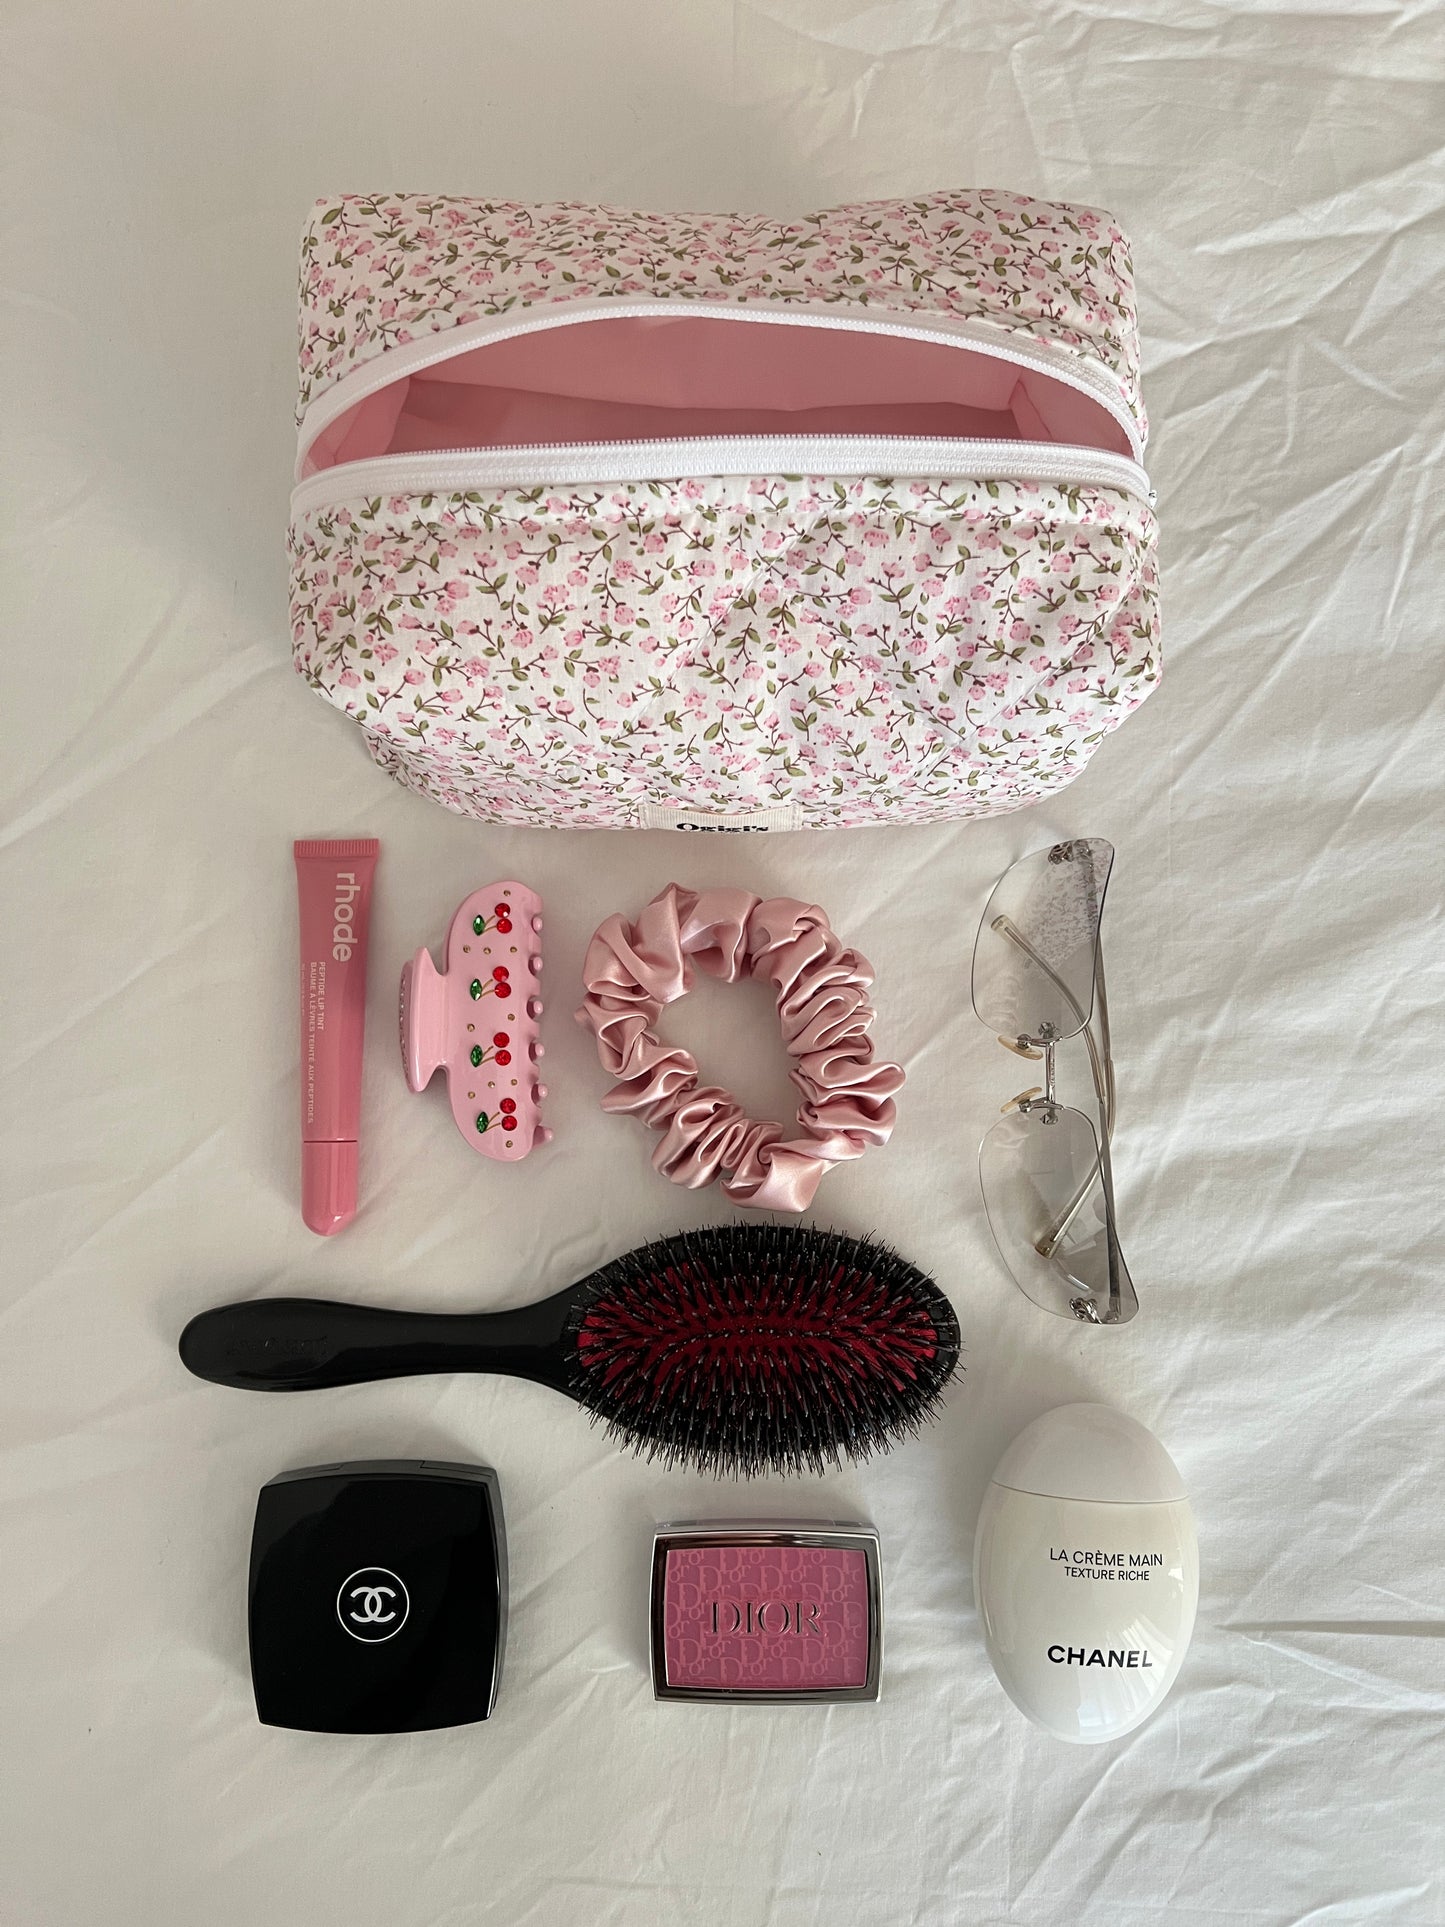 My pink beauty case